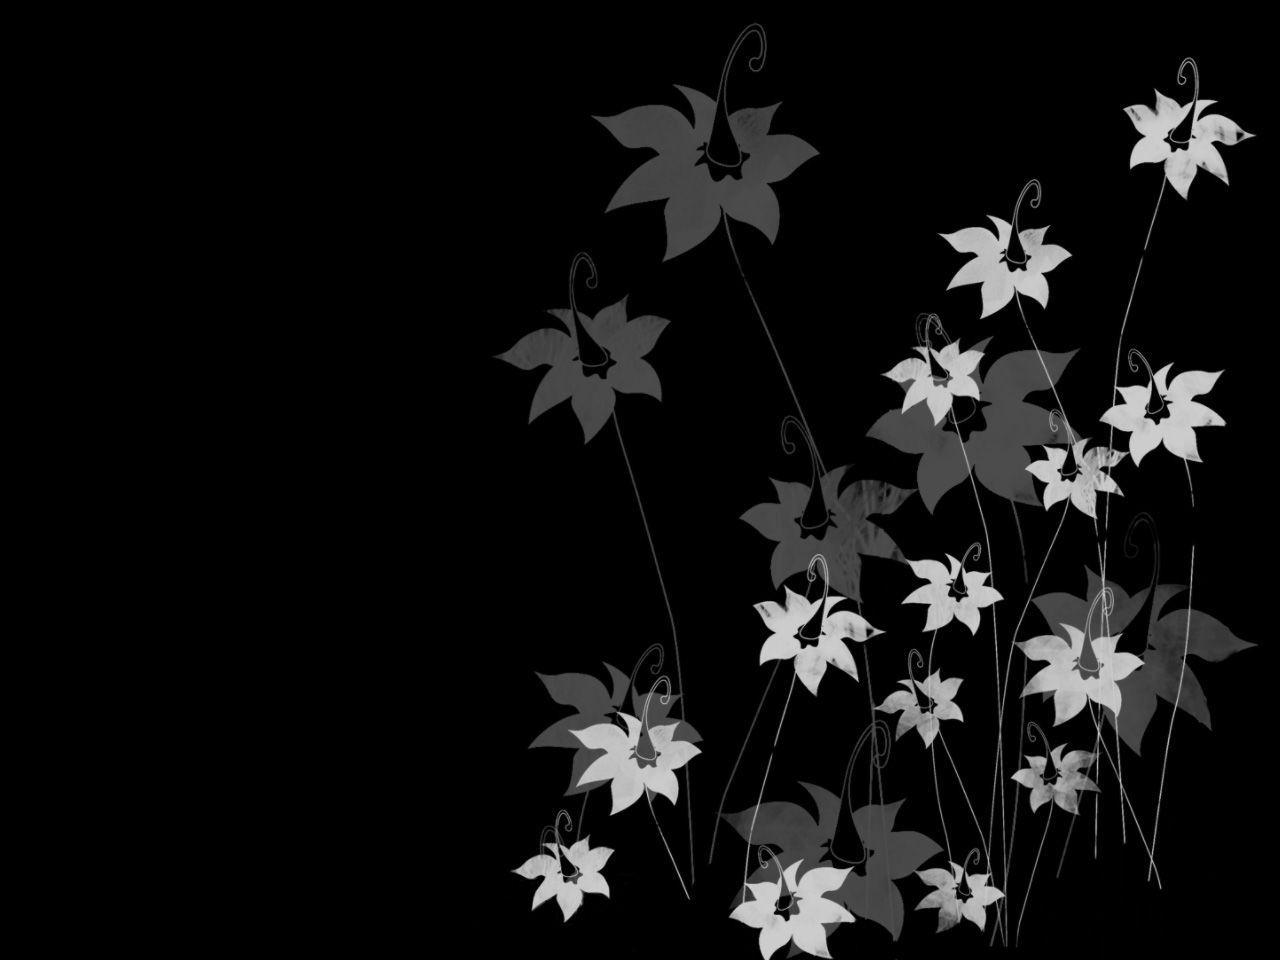 40 Gambar Flowers Wallpaper Hd in Black Background terbaru 2020